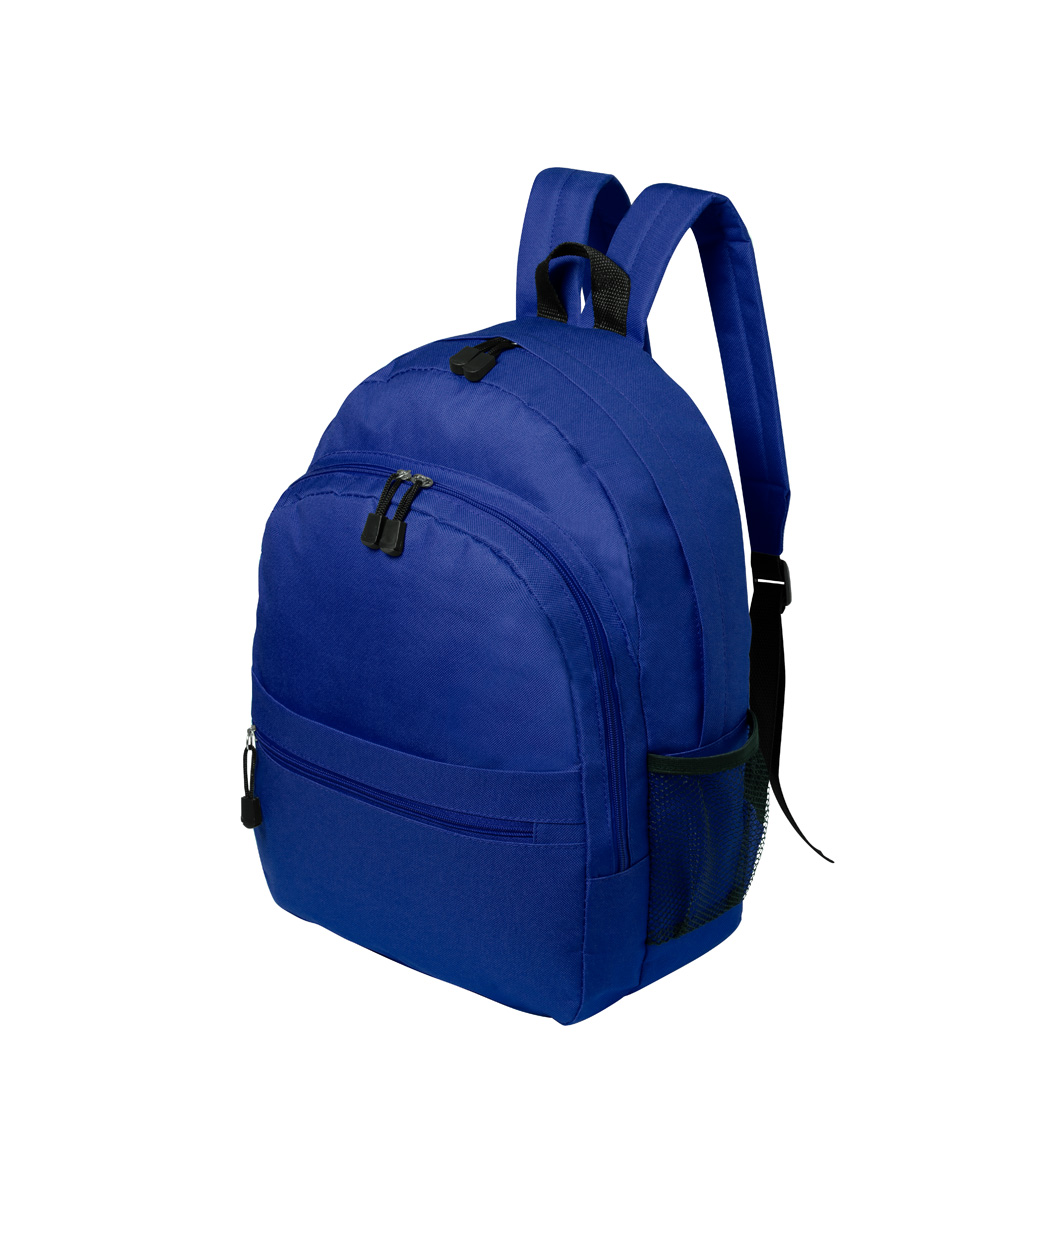 Ventix backpack - blue